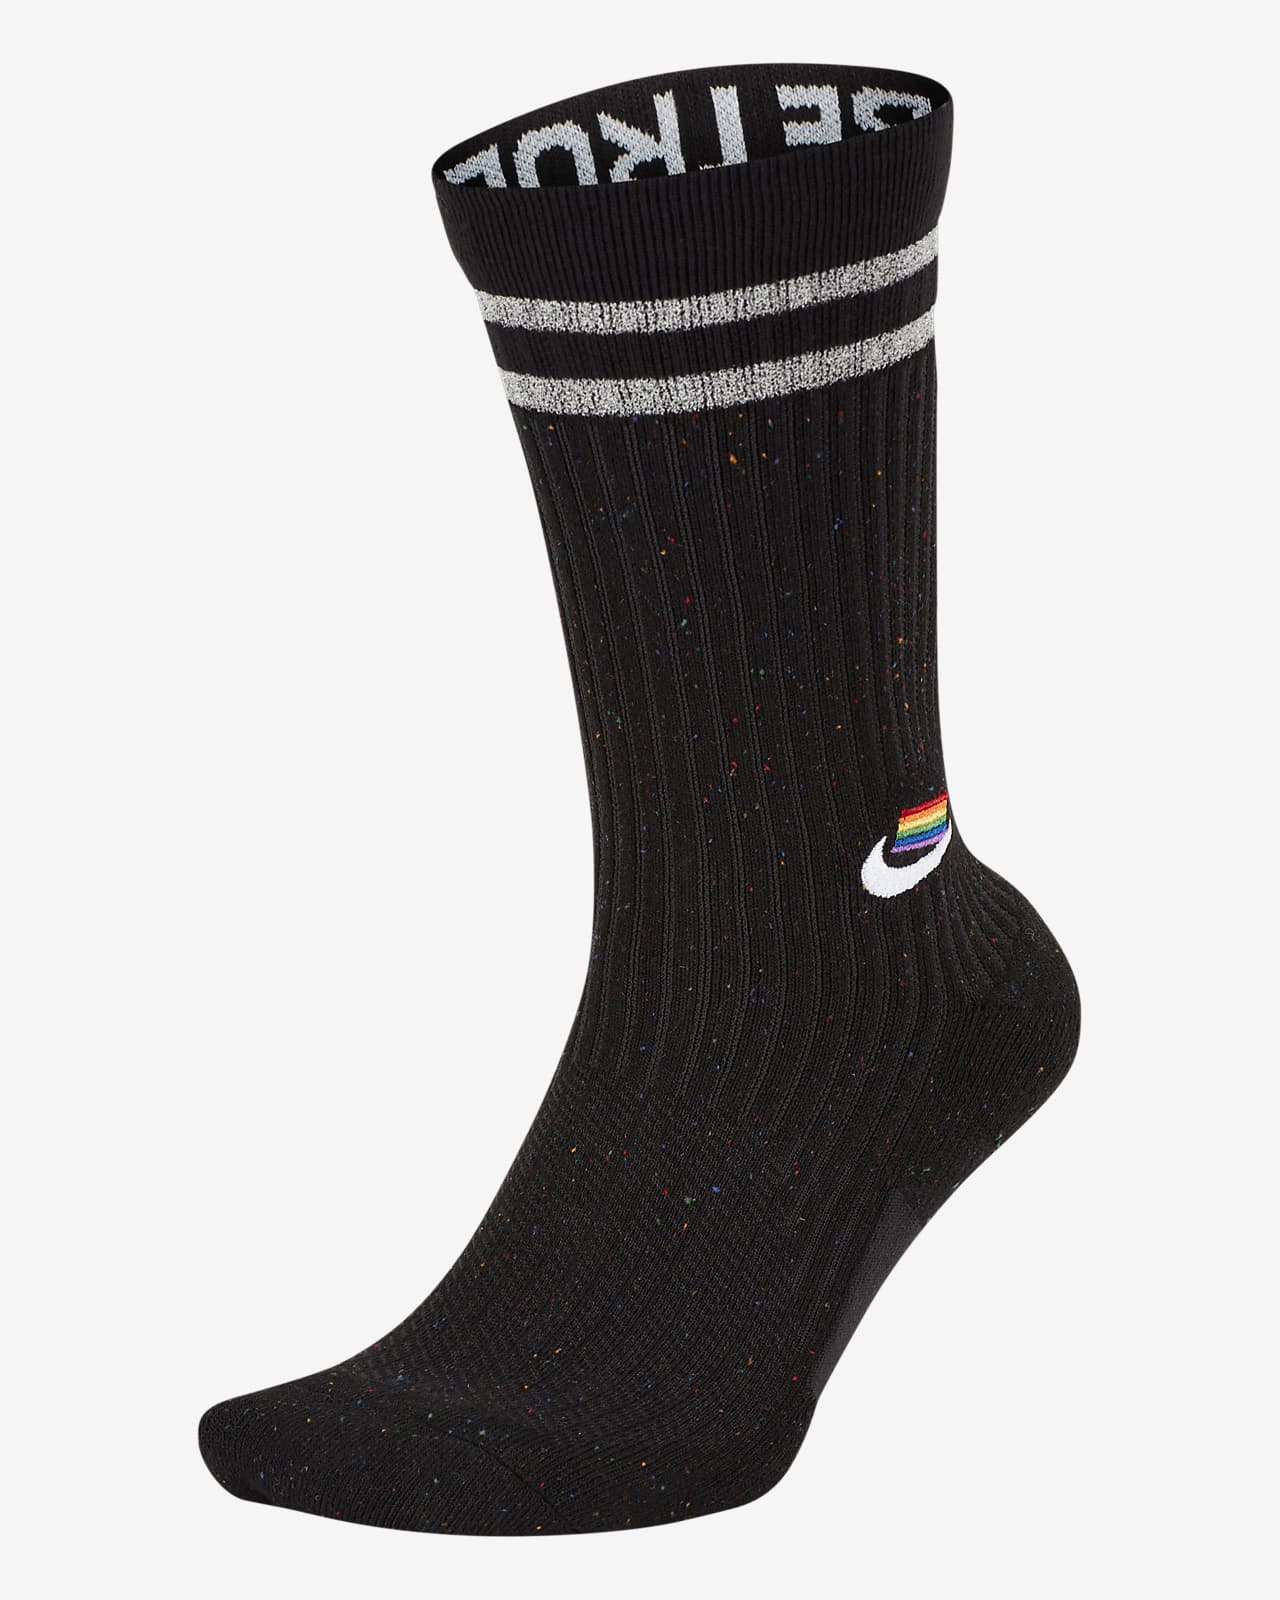 Nike SNKR Sox BeTrue Crew Socks